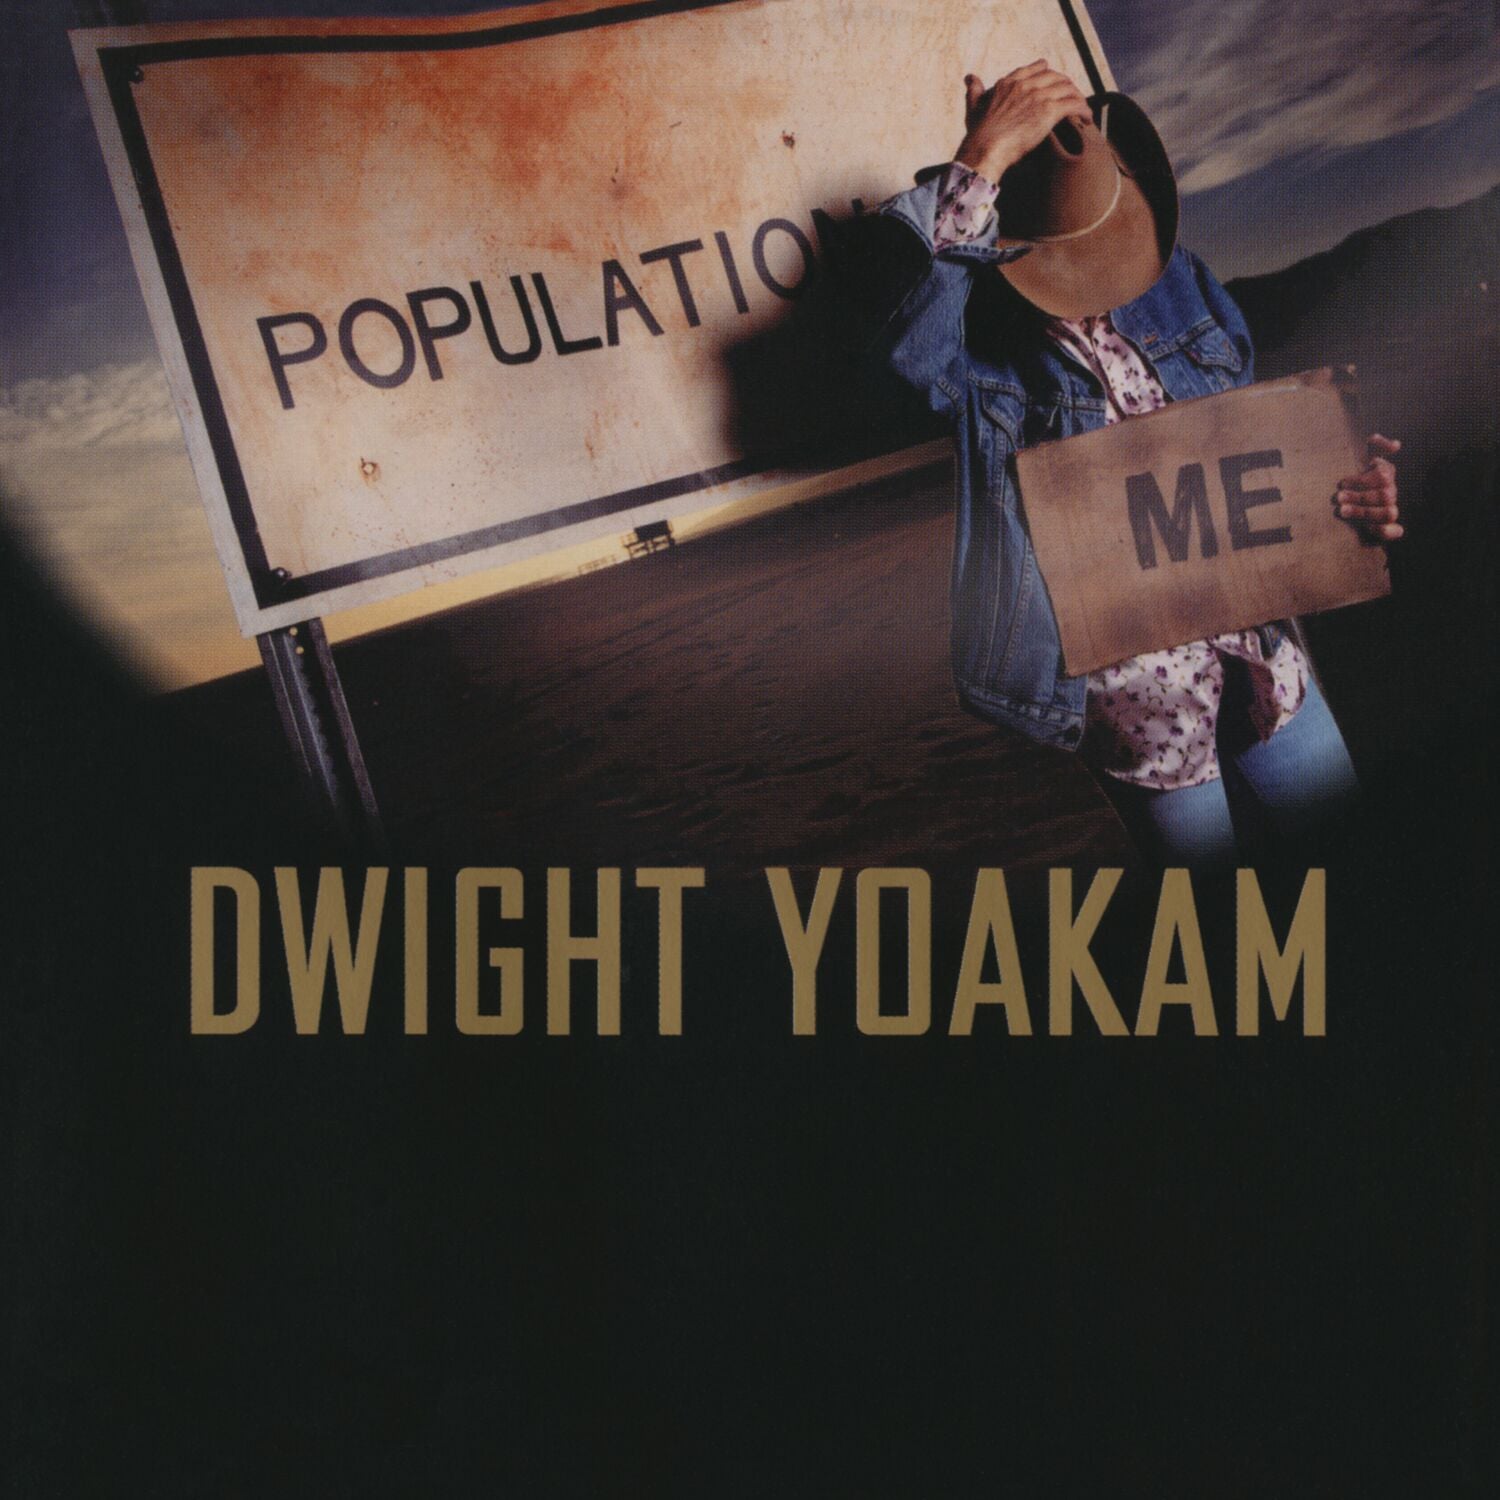 Dwight Yoakam - Population: Me [CD]